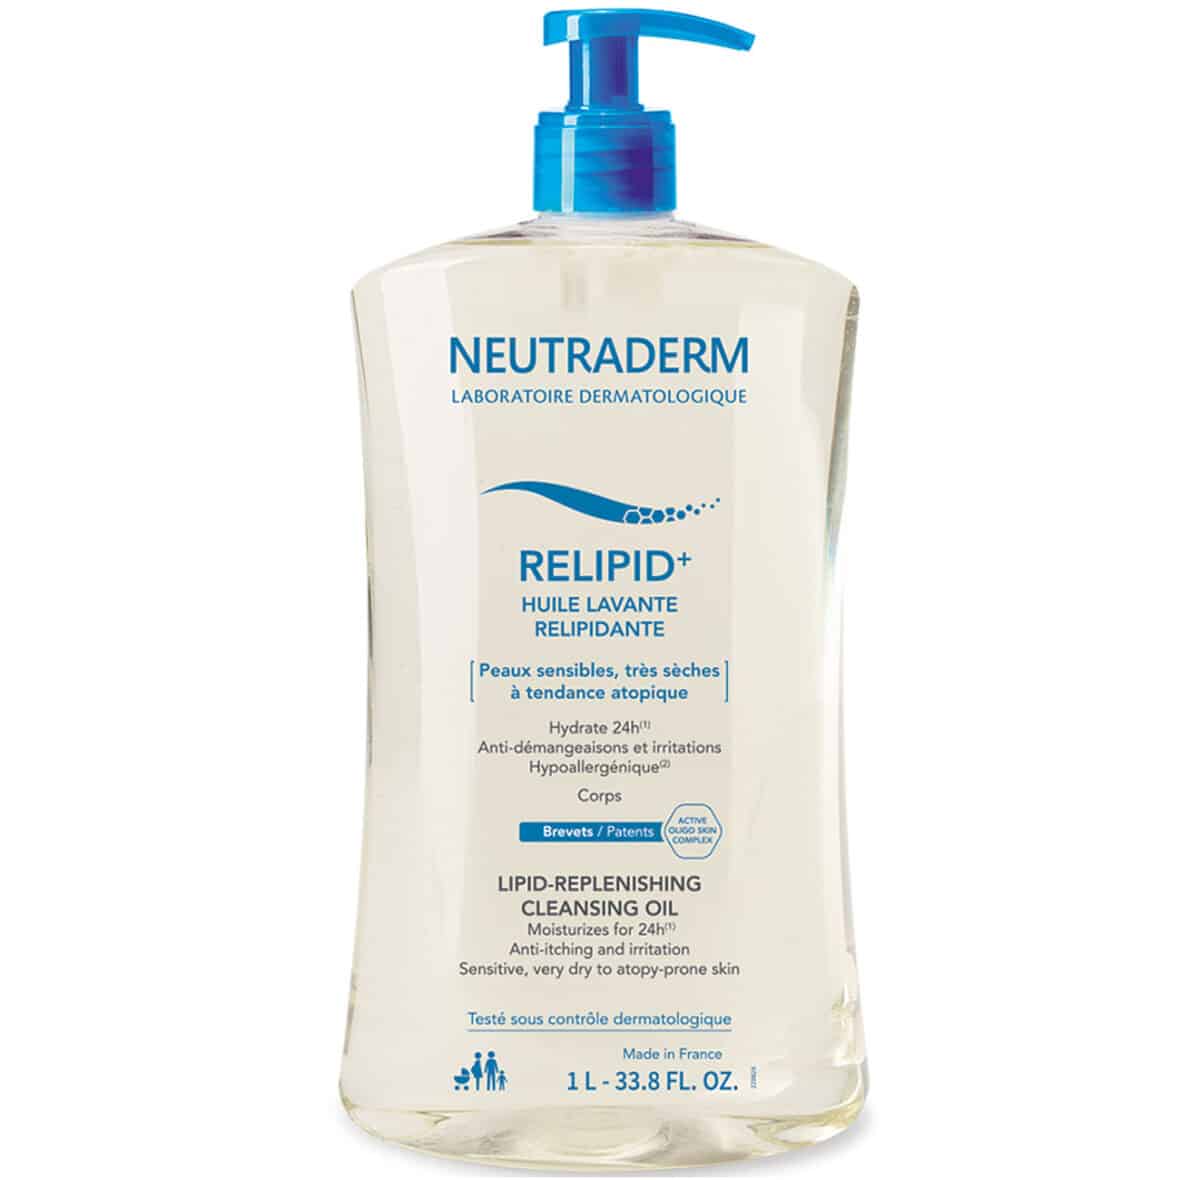 Neutraderm – Relipid+ Huile lavante relipidante 1L